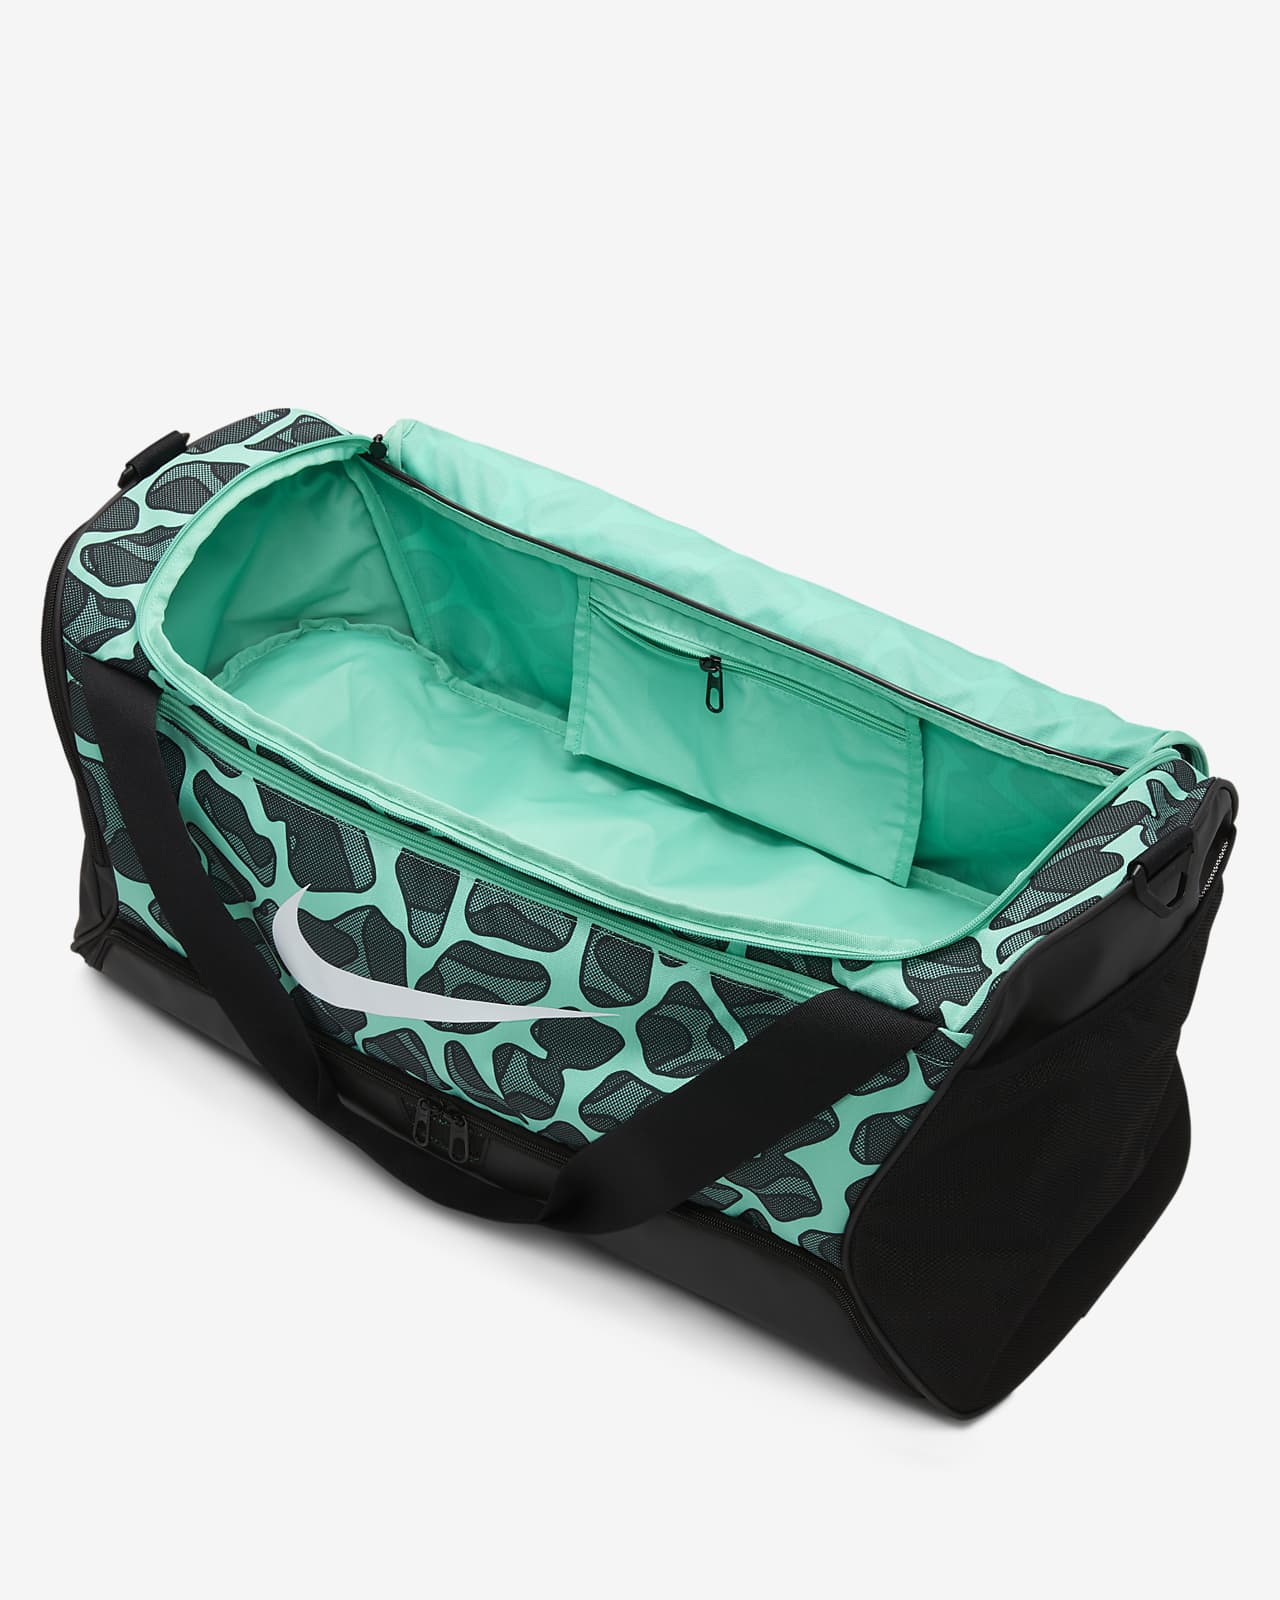 Nike Brasilia Duffel Bag (Medium, 60L)